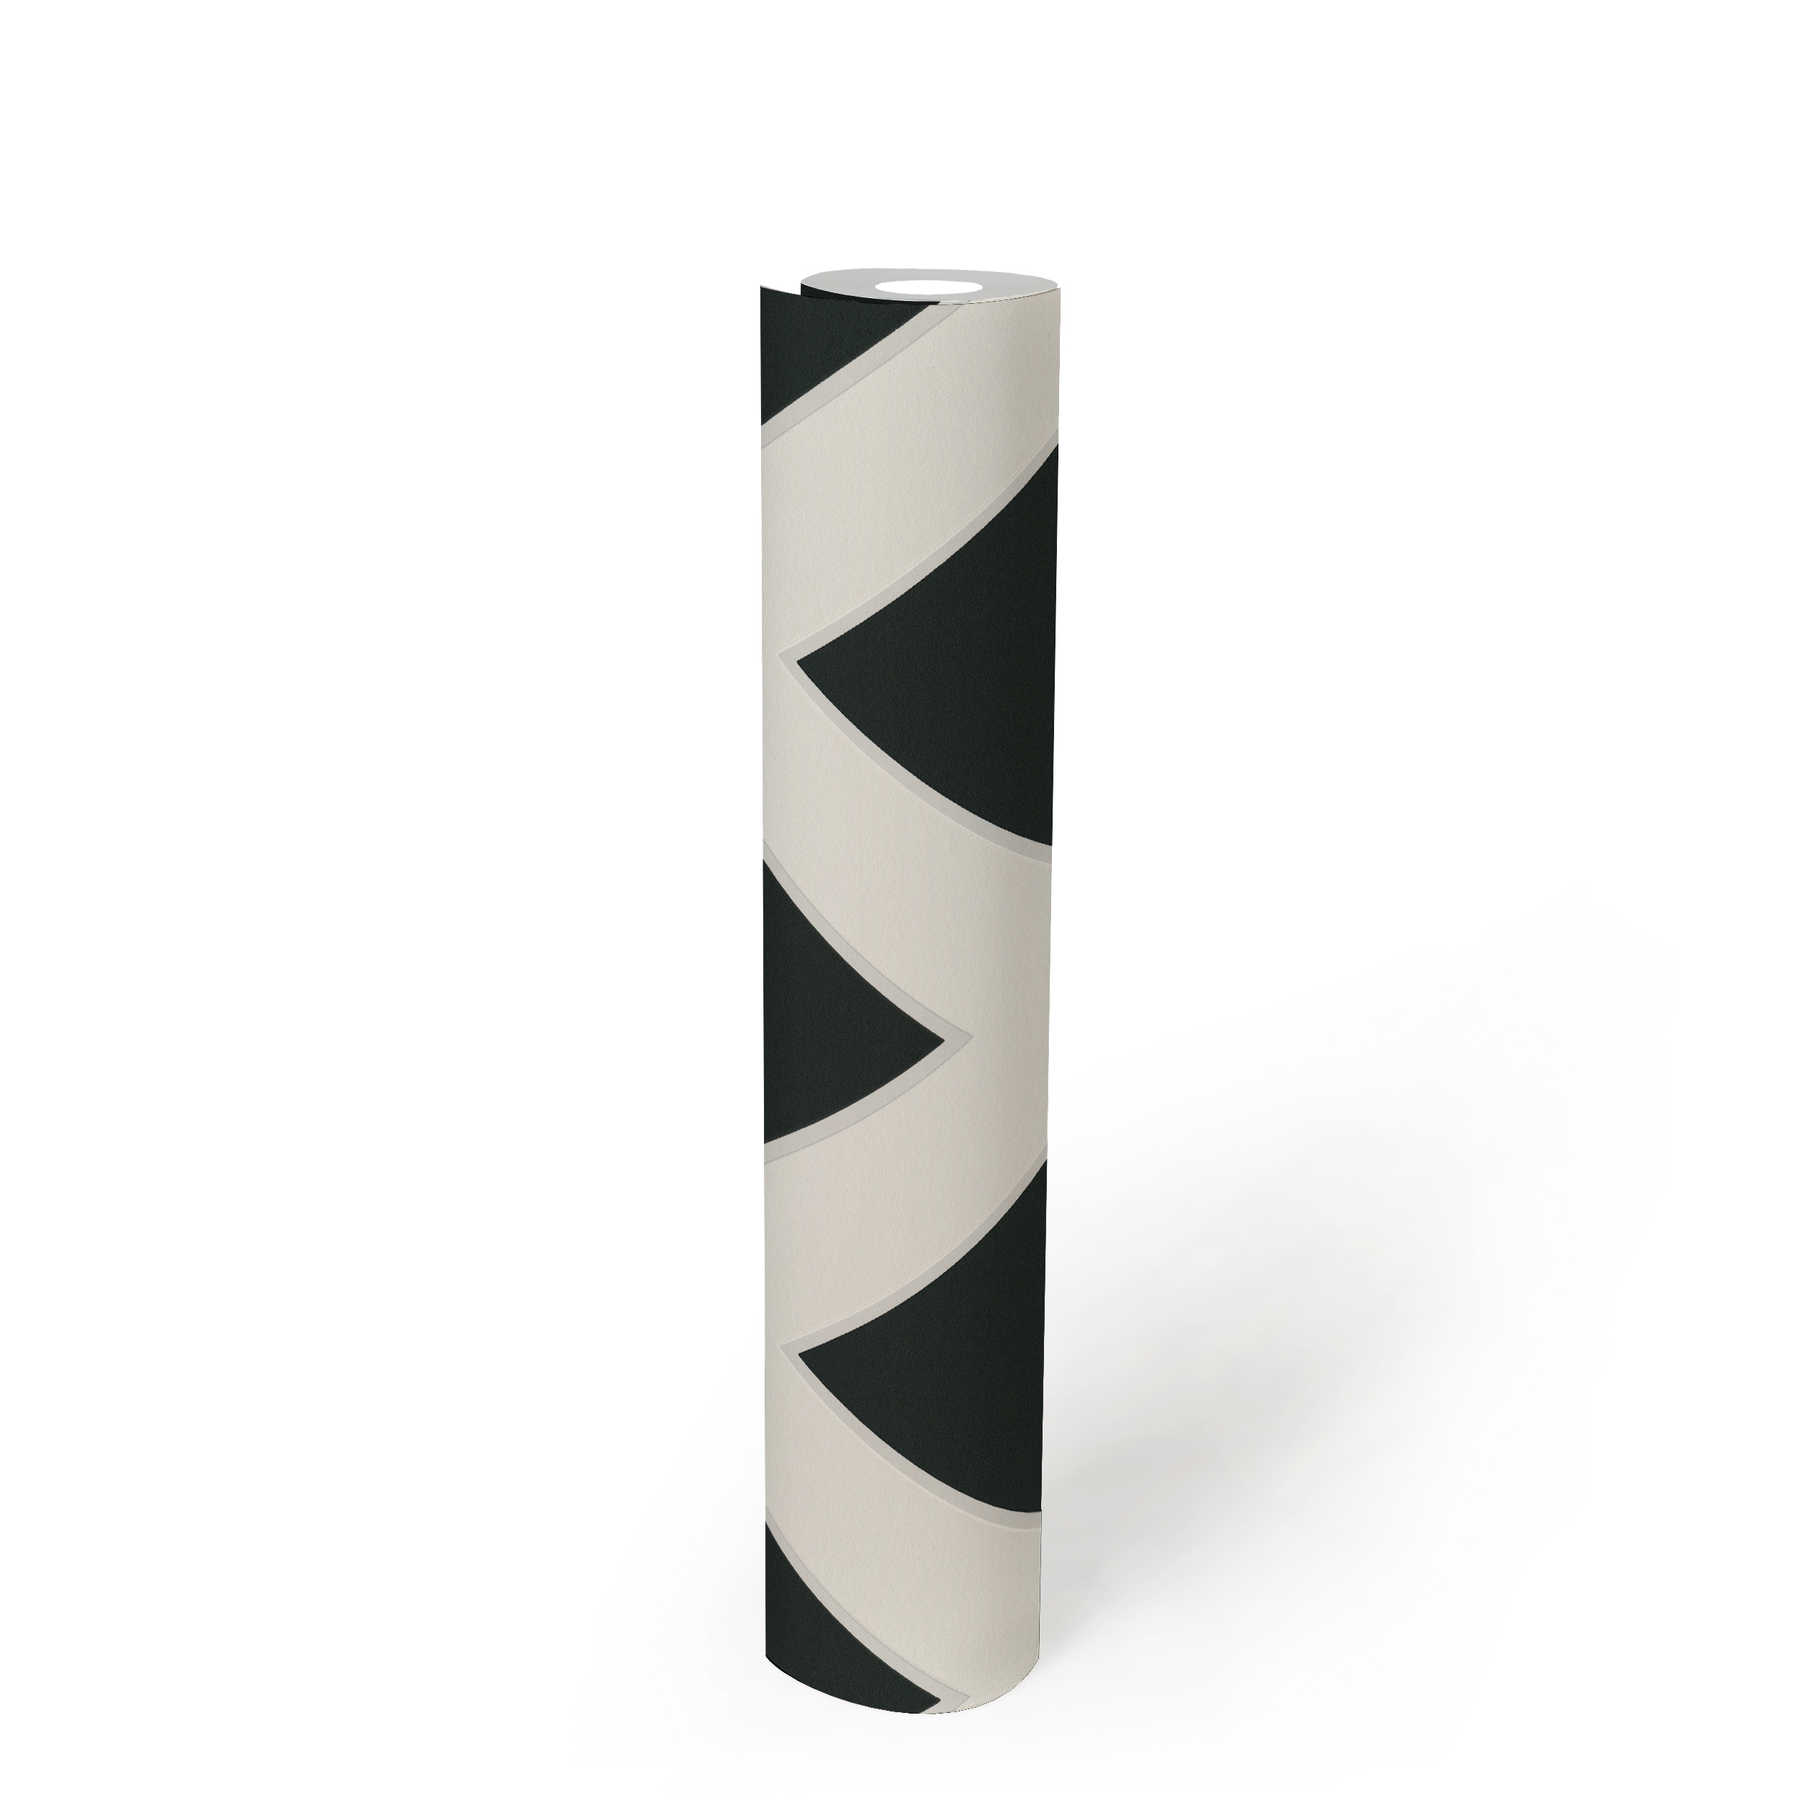             Wallpaper zigzag stripes in black and white
        